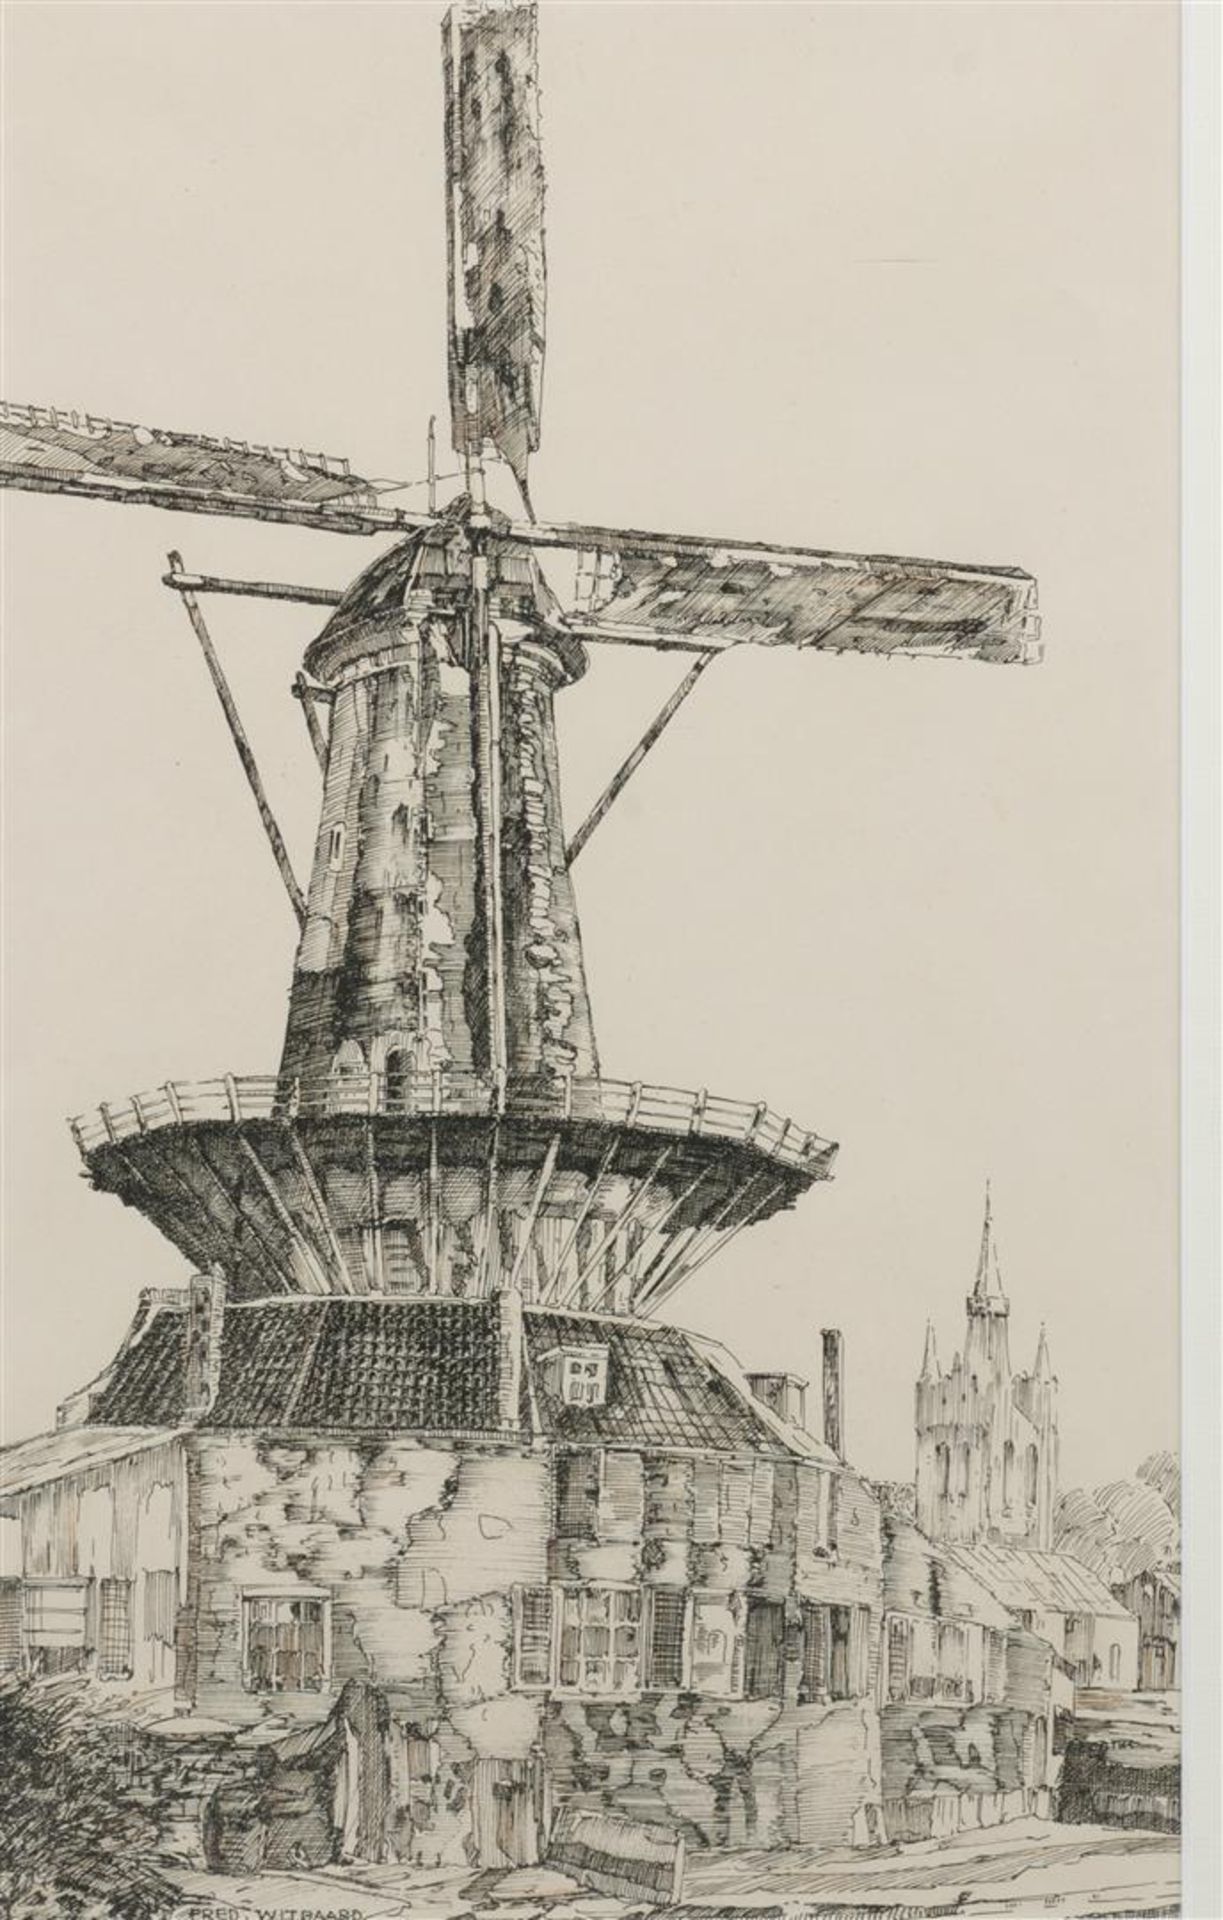  Witbaard, Fred. (1905-1970)
The mill "De Roos", in Delft w